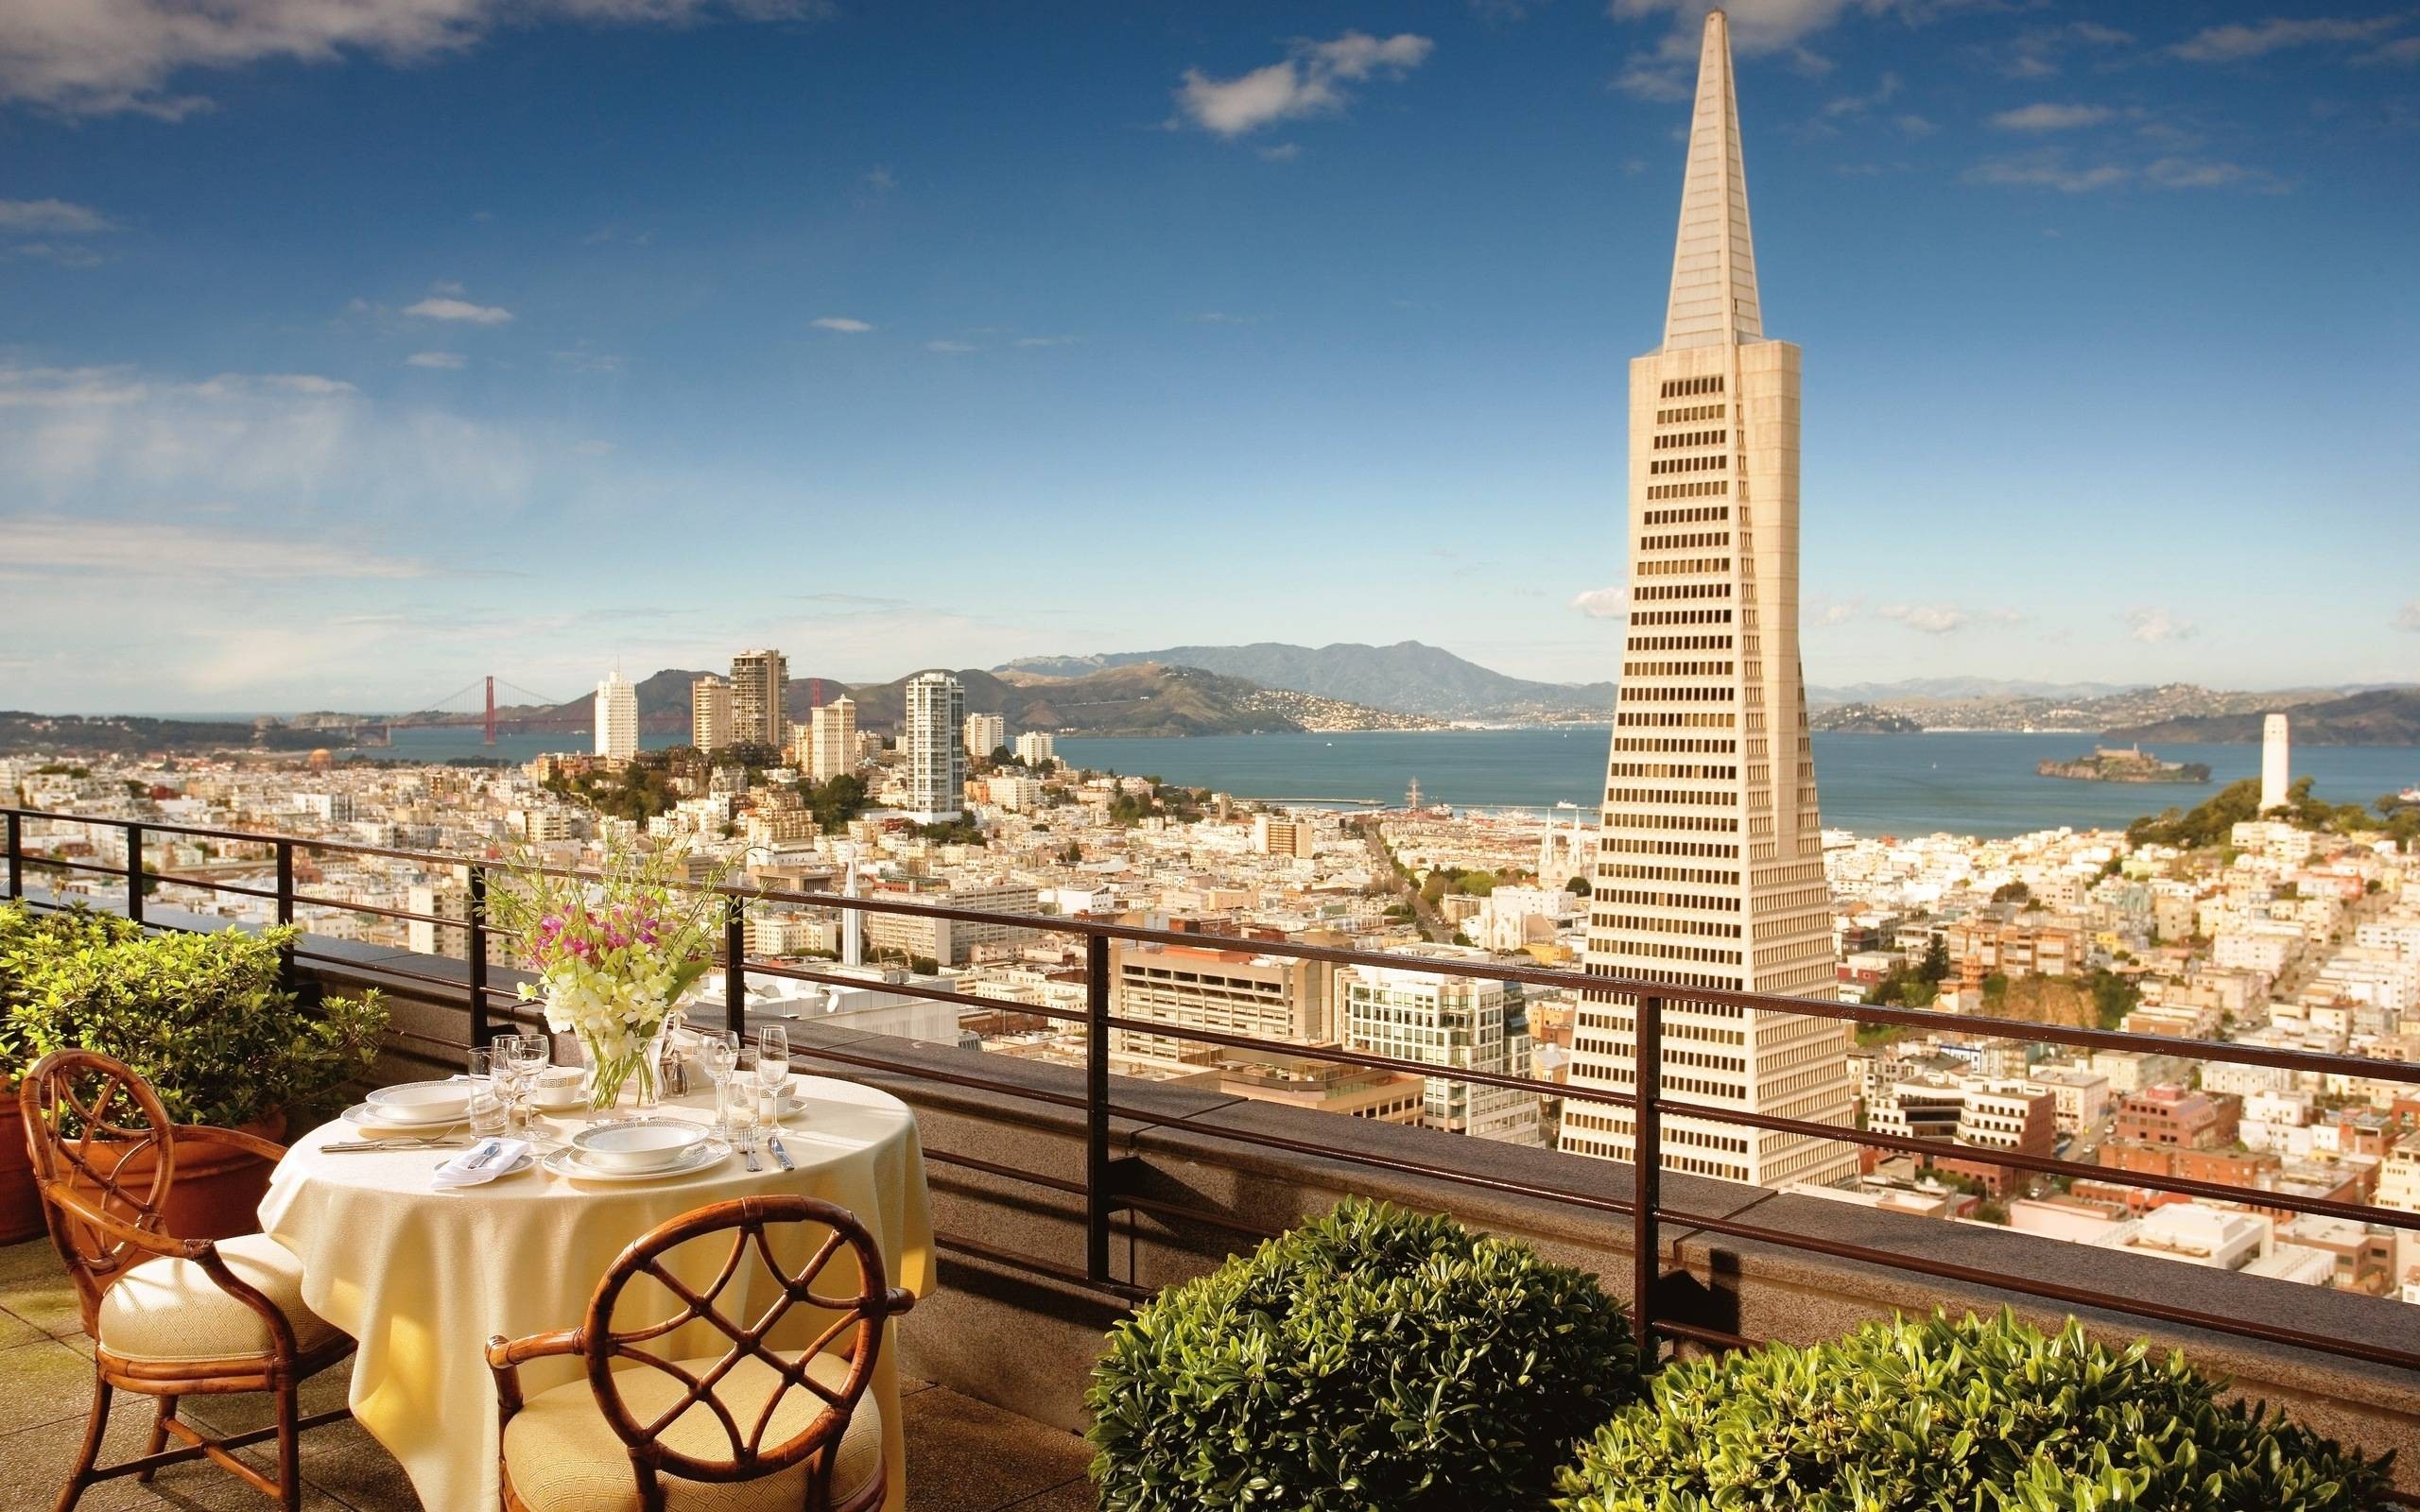 General 2560x1600 San Francisco restaurant cityscape USA